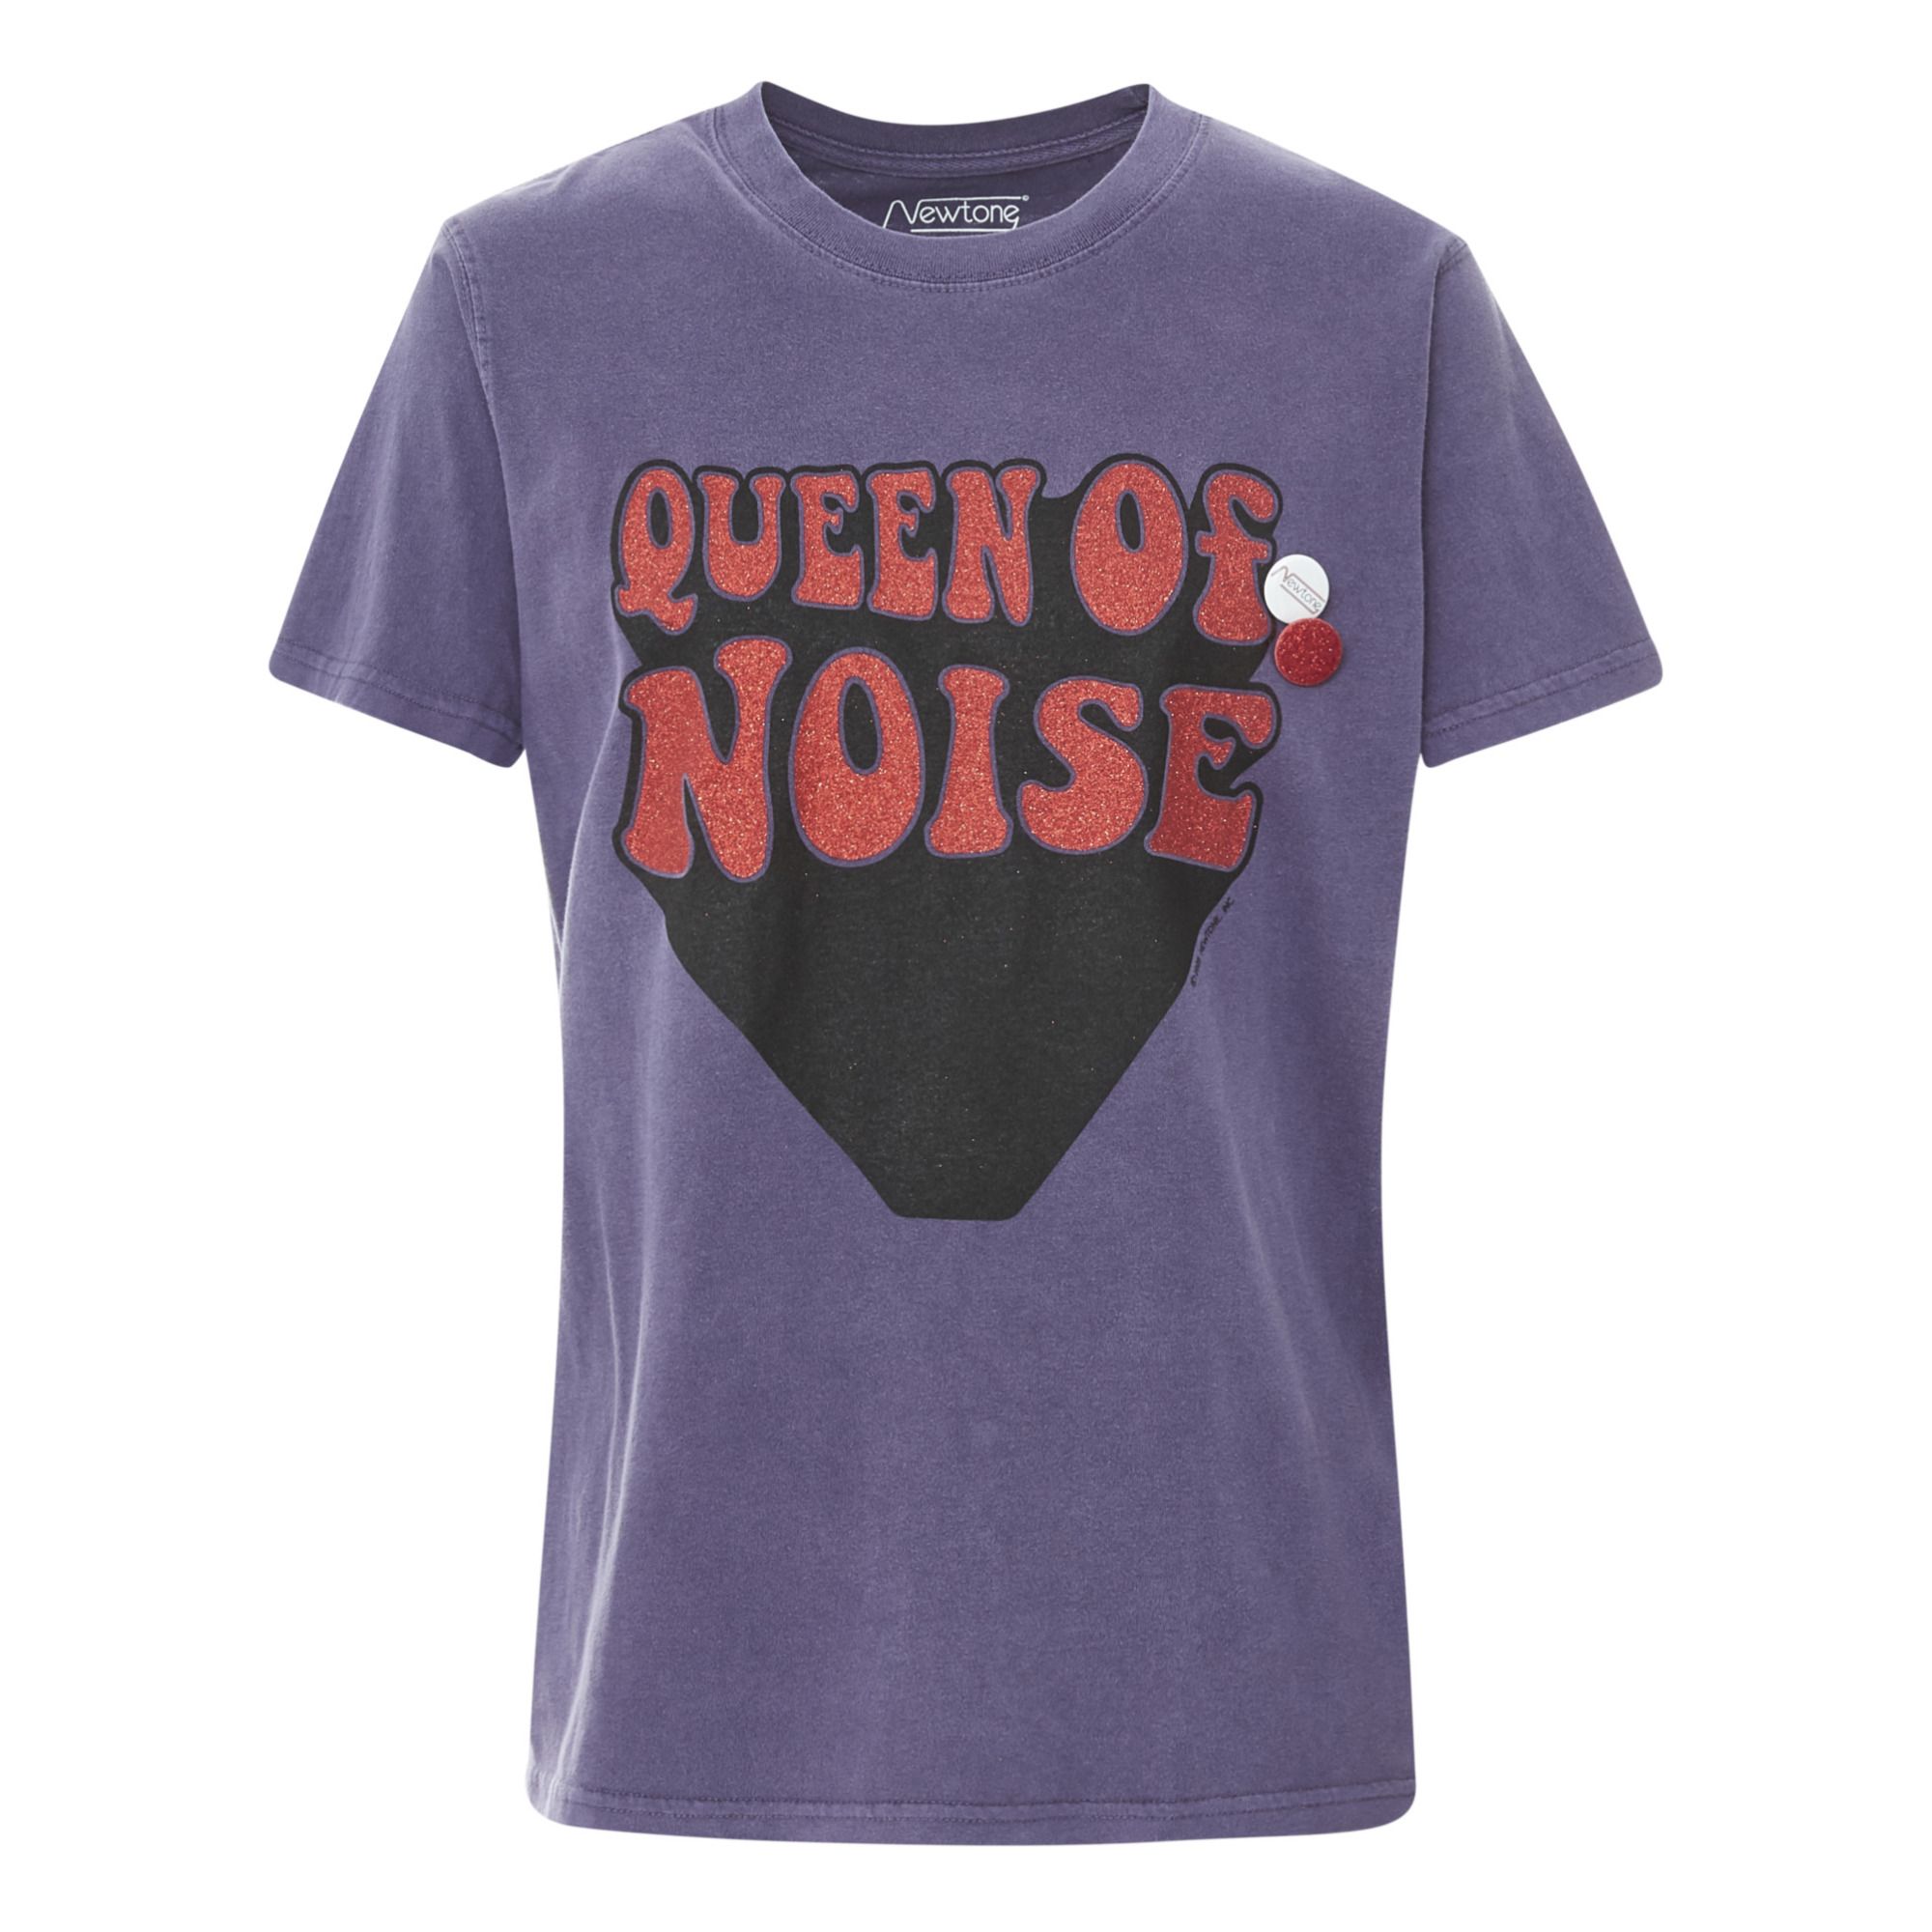 Newtone - T-Shirt Queen - Femme - Violet